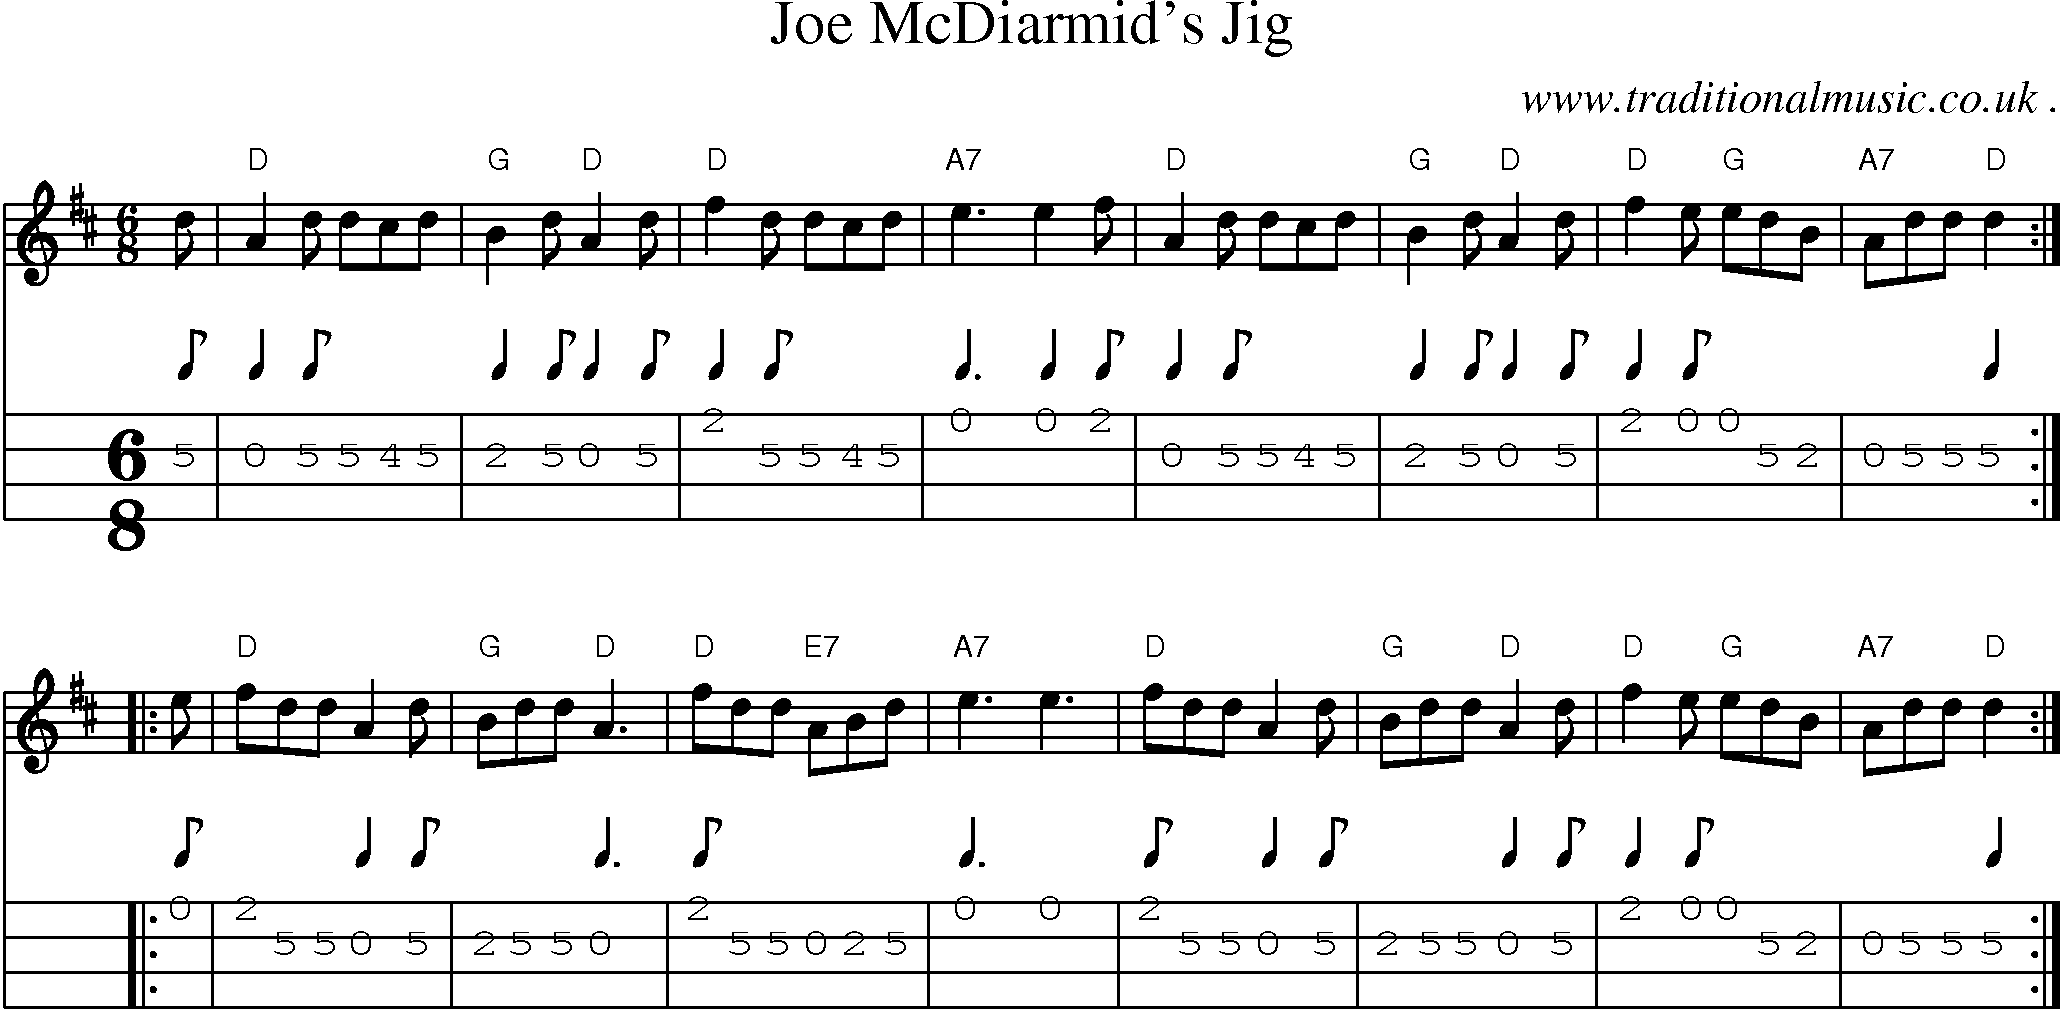 Sheet-music  score, Chords and Mandolin Tabs for Joe Mcdiarmids Jig